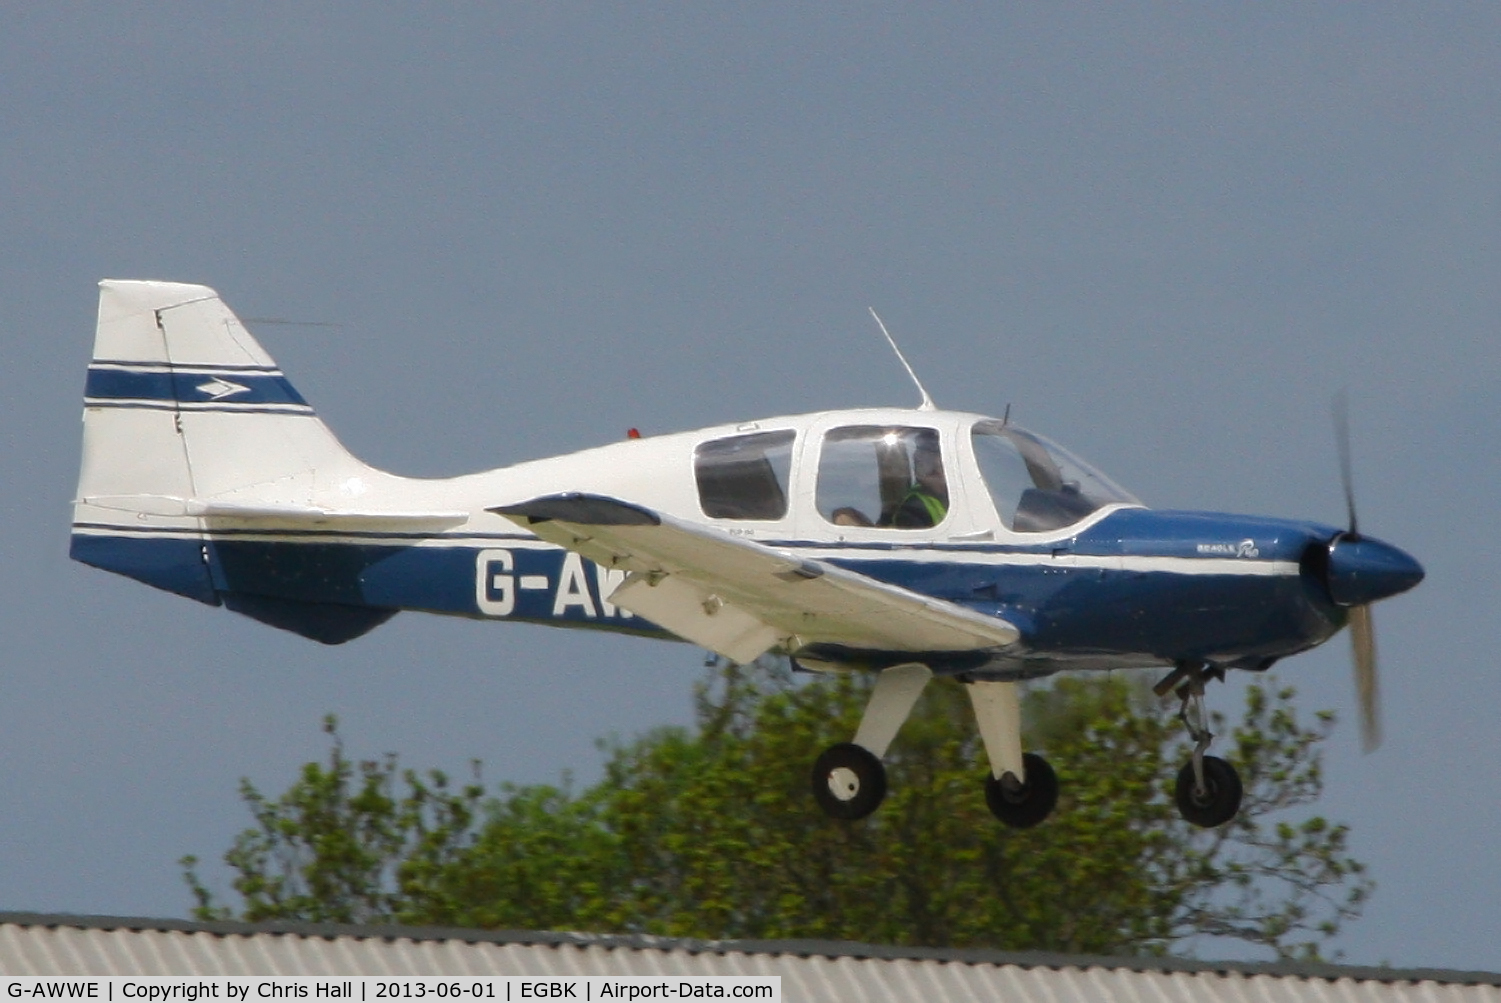 G-AWWE, 1969 Beagle B-121 Pup Series 2 (Pup 150) C/N B121-032, at AeroExpo 2013